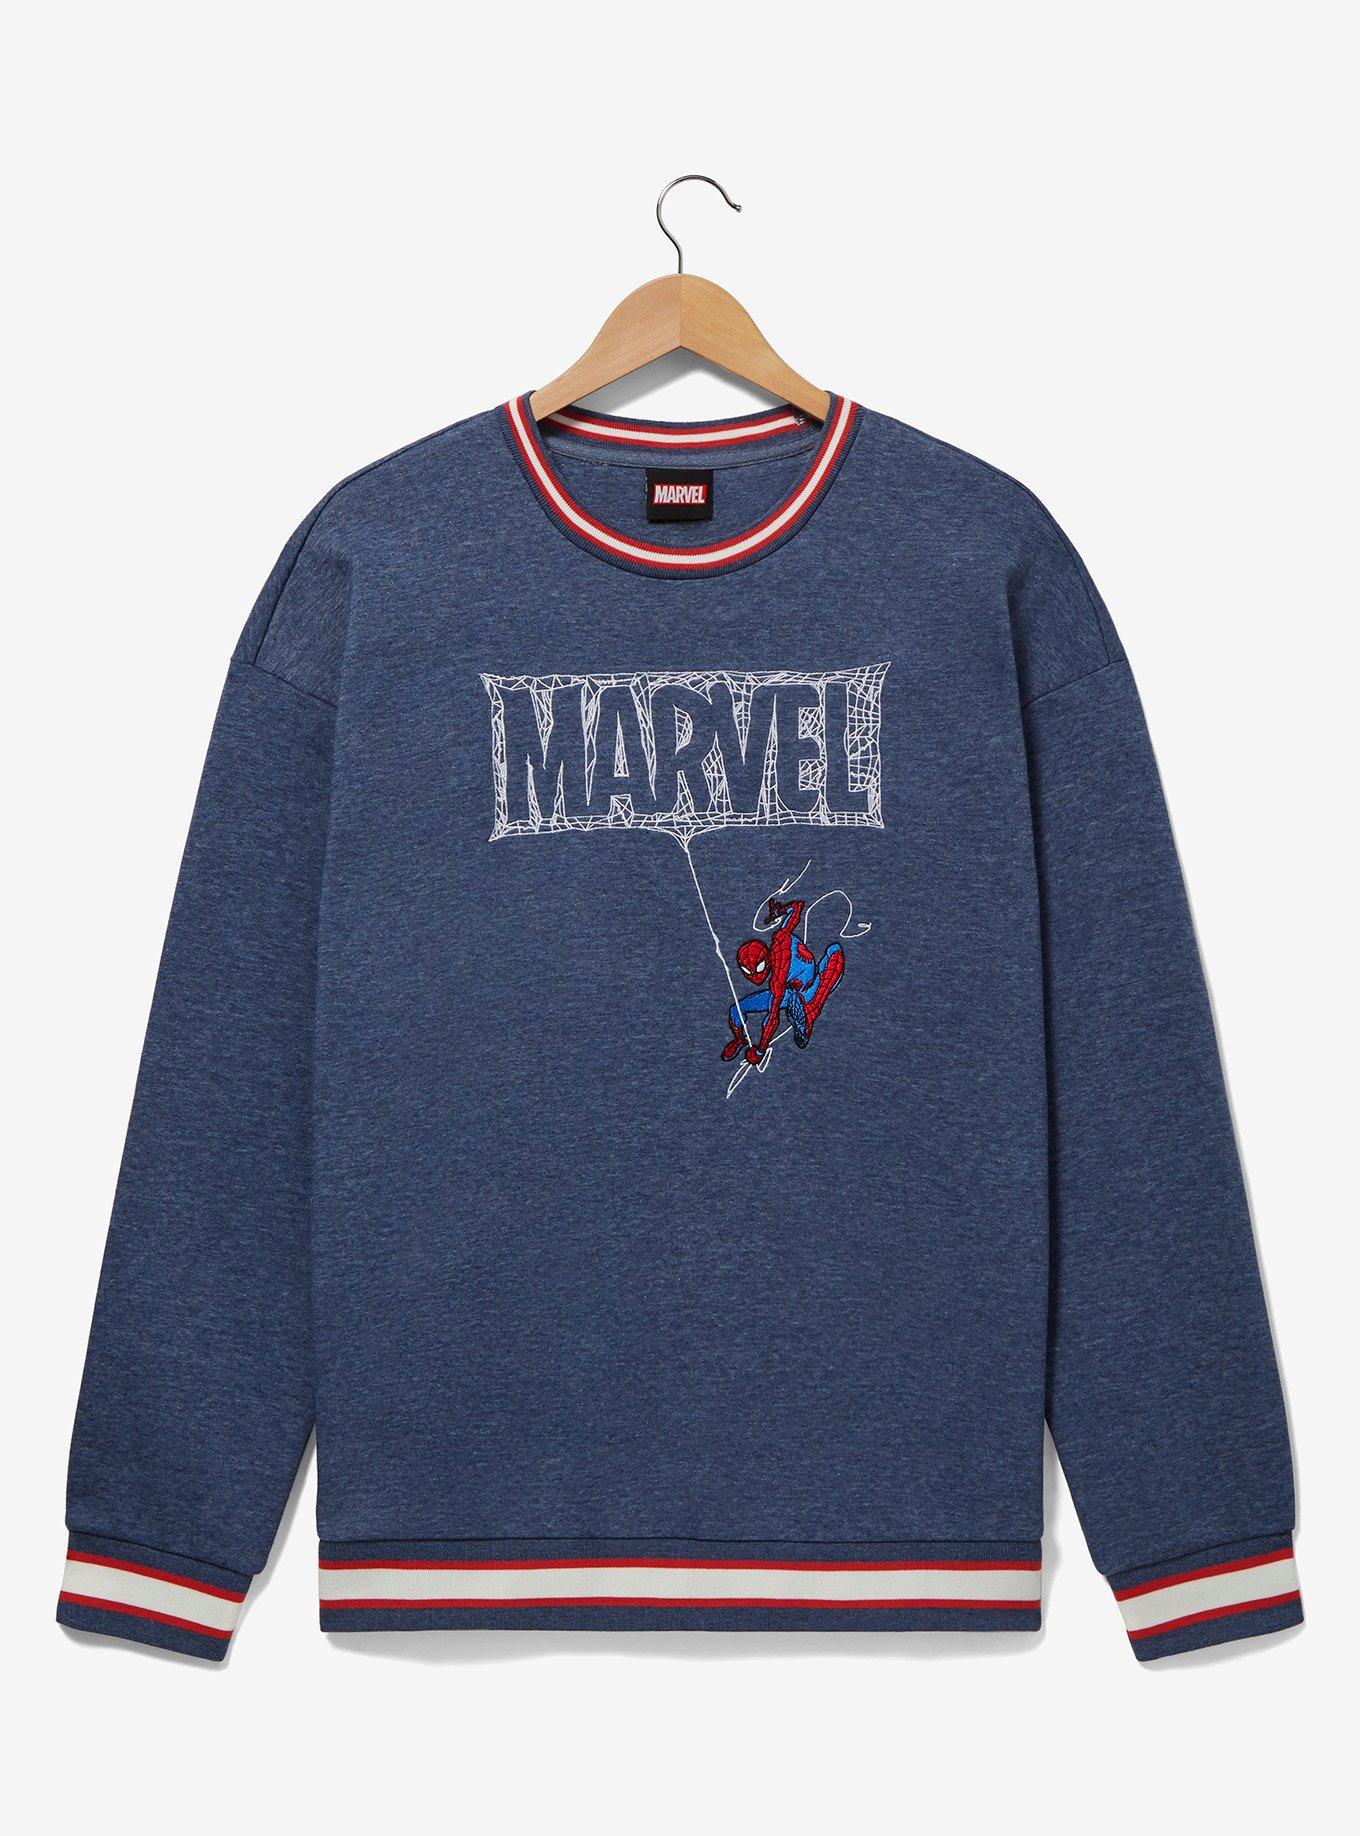 Marvel Spider-Man We Are Venom Shirt, Sweatshirt, MCU Fan Gifts - Family  Gift Ideas That Everyone Will Enjoy